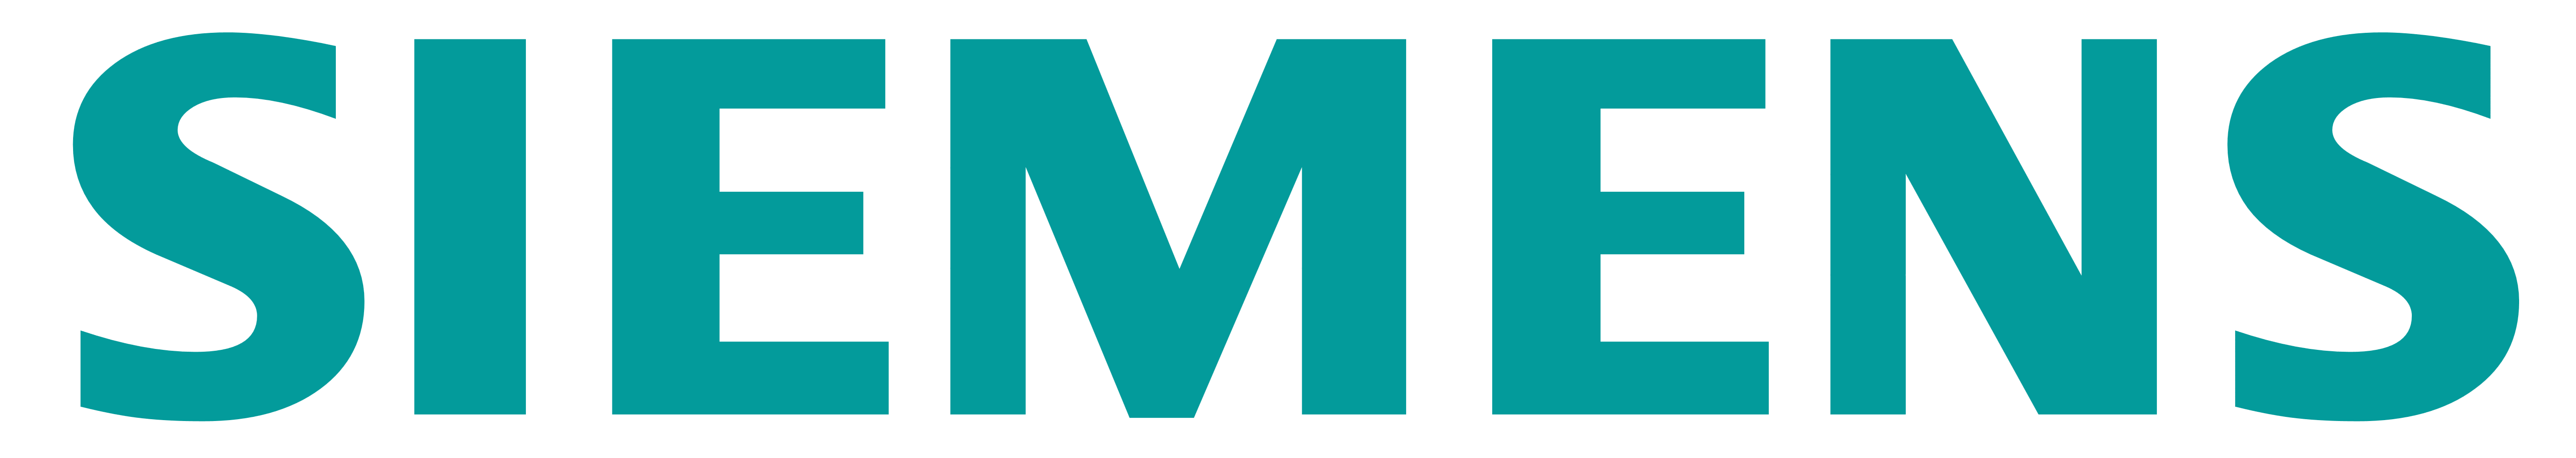 Siemens logo, logotype